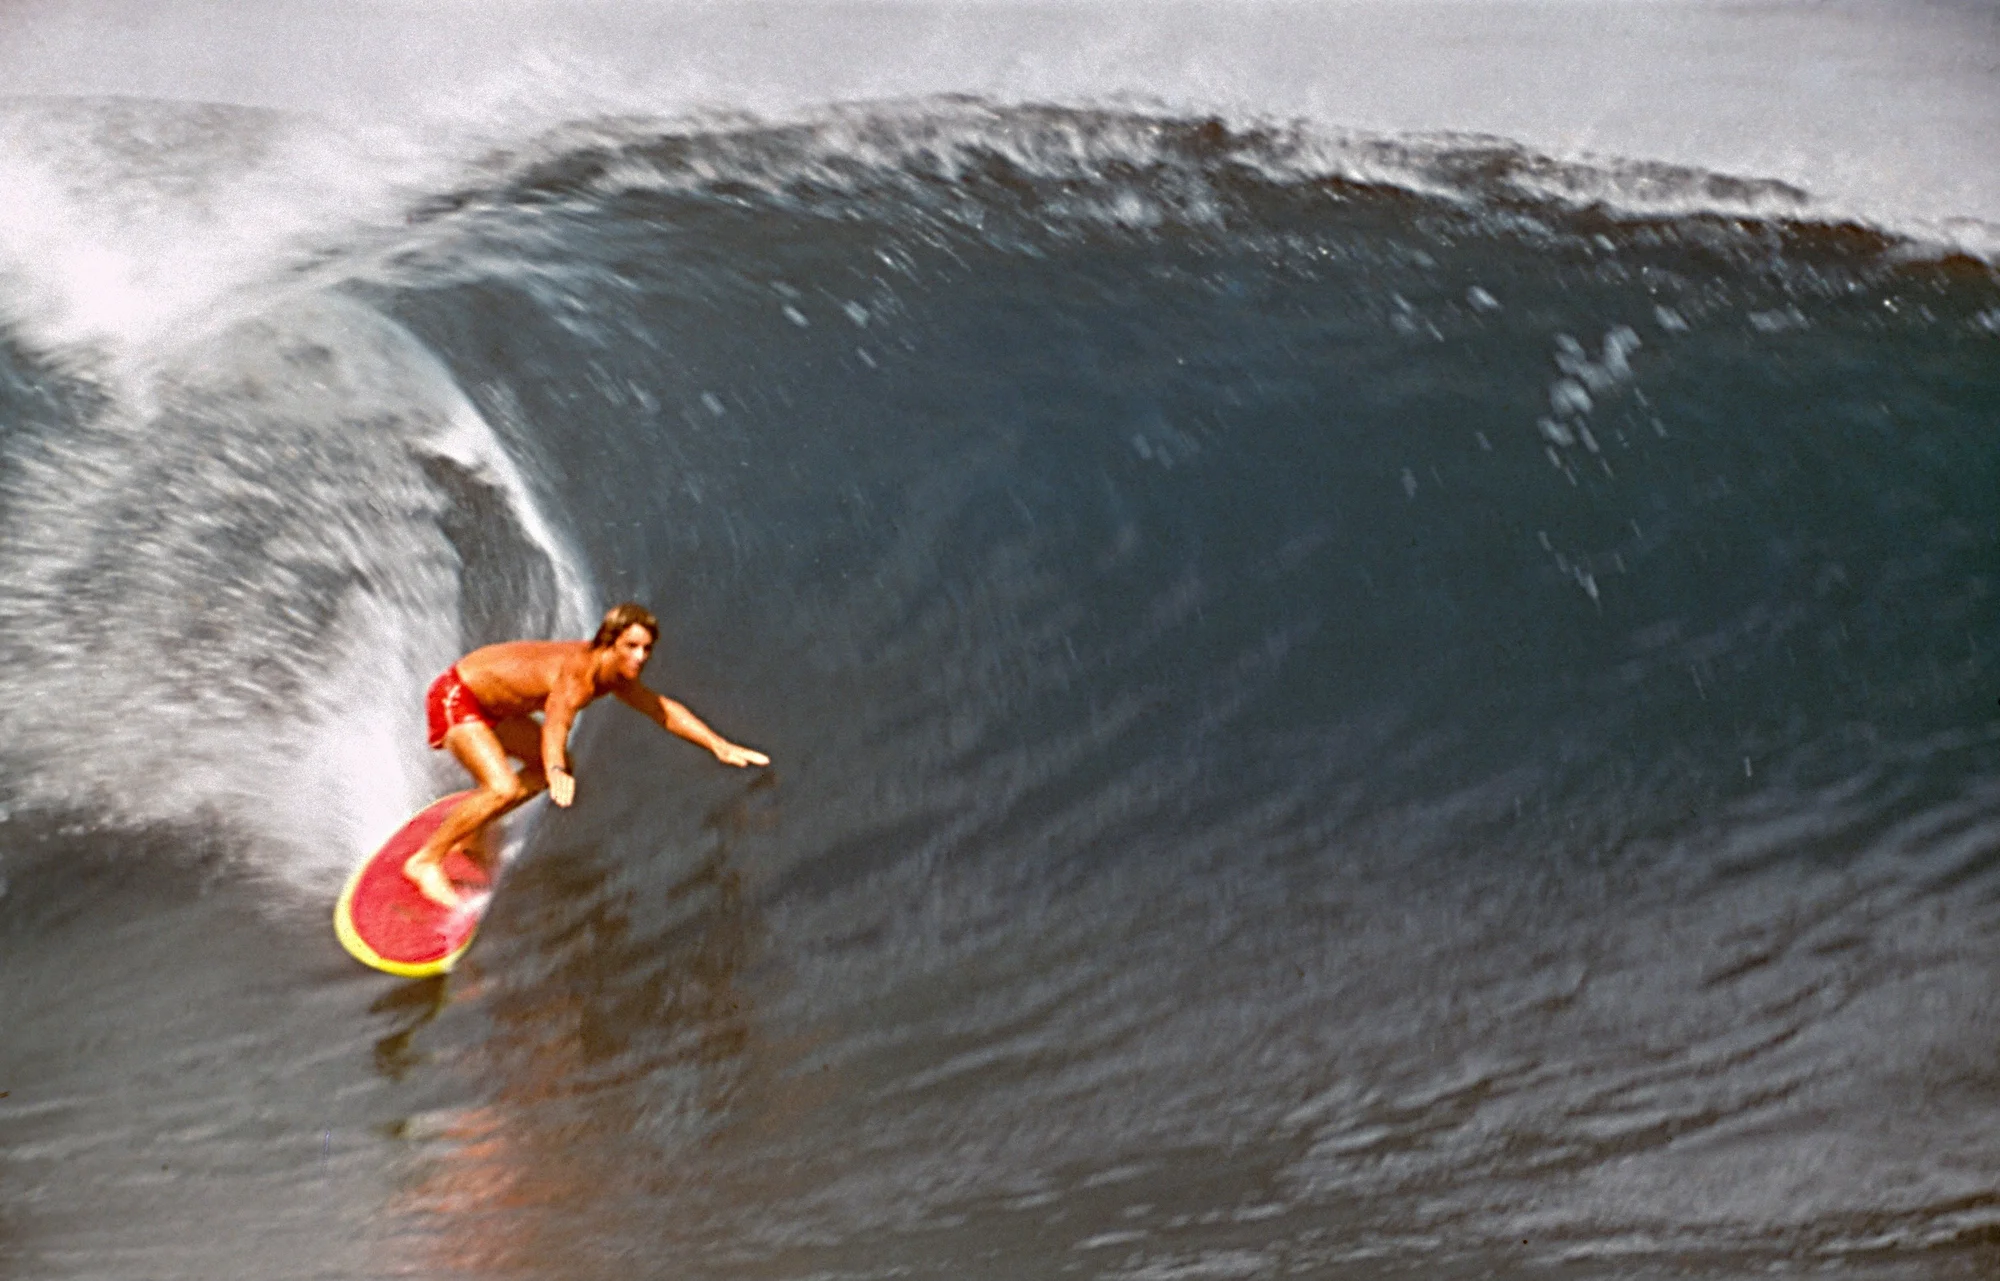 A surfer catches a wave